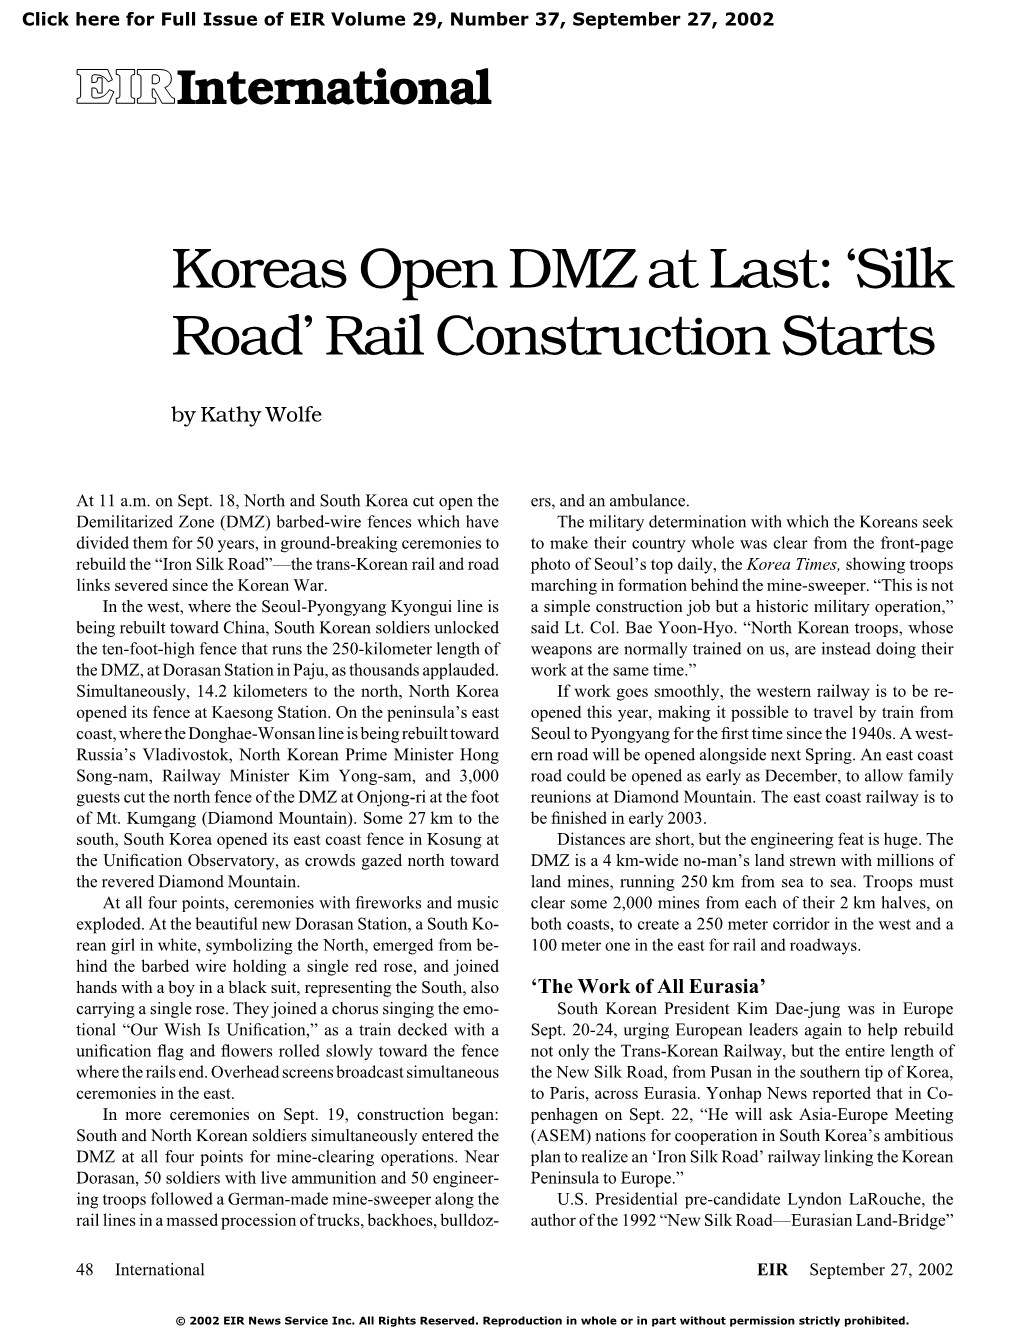 Koreas Open DMZ at Last: 'Silk Road' Rail Construction Starts